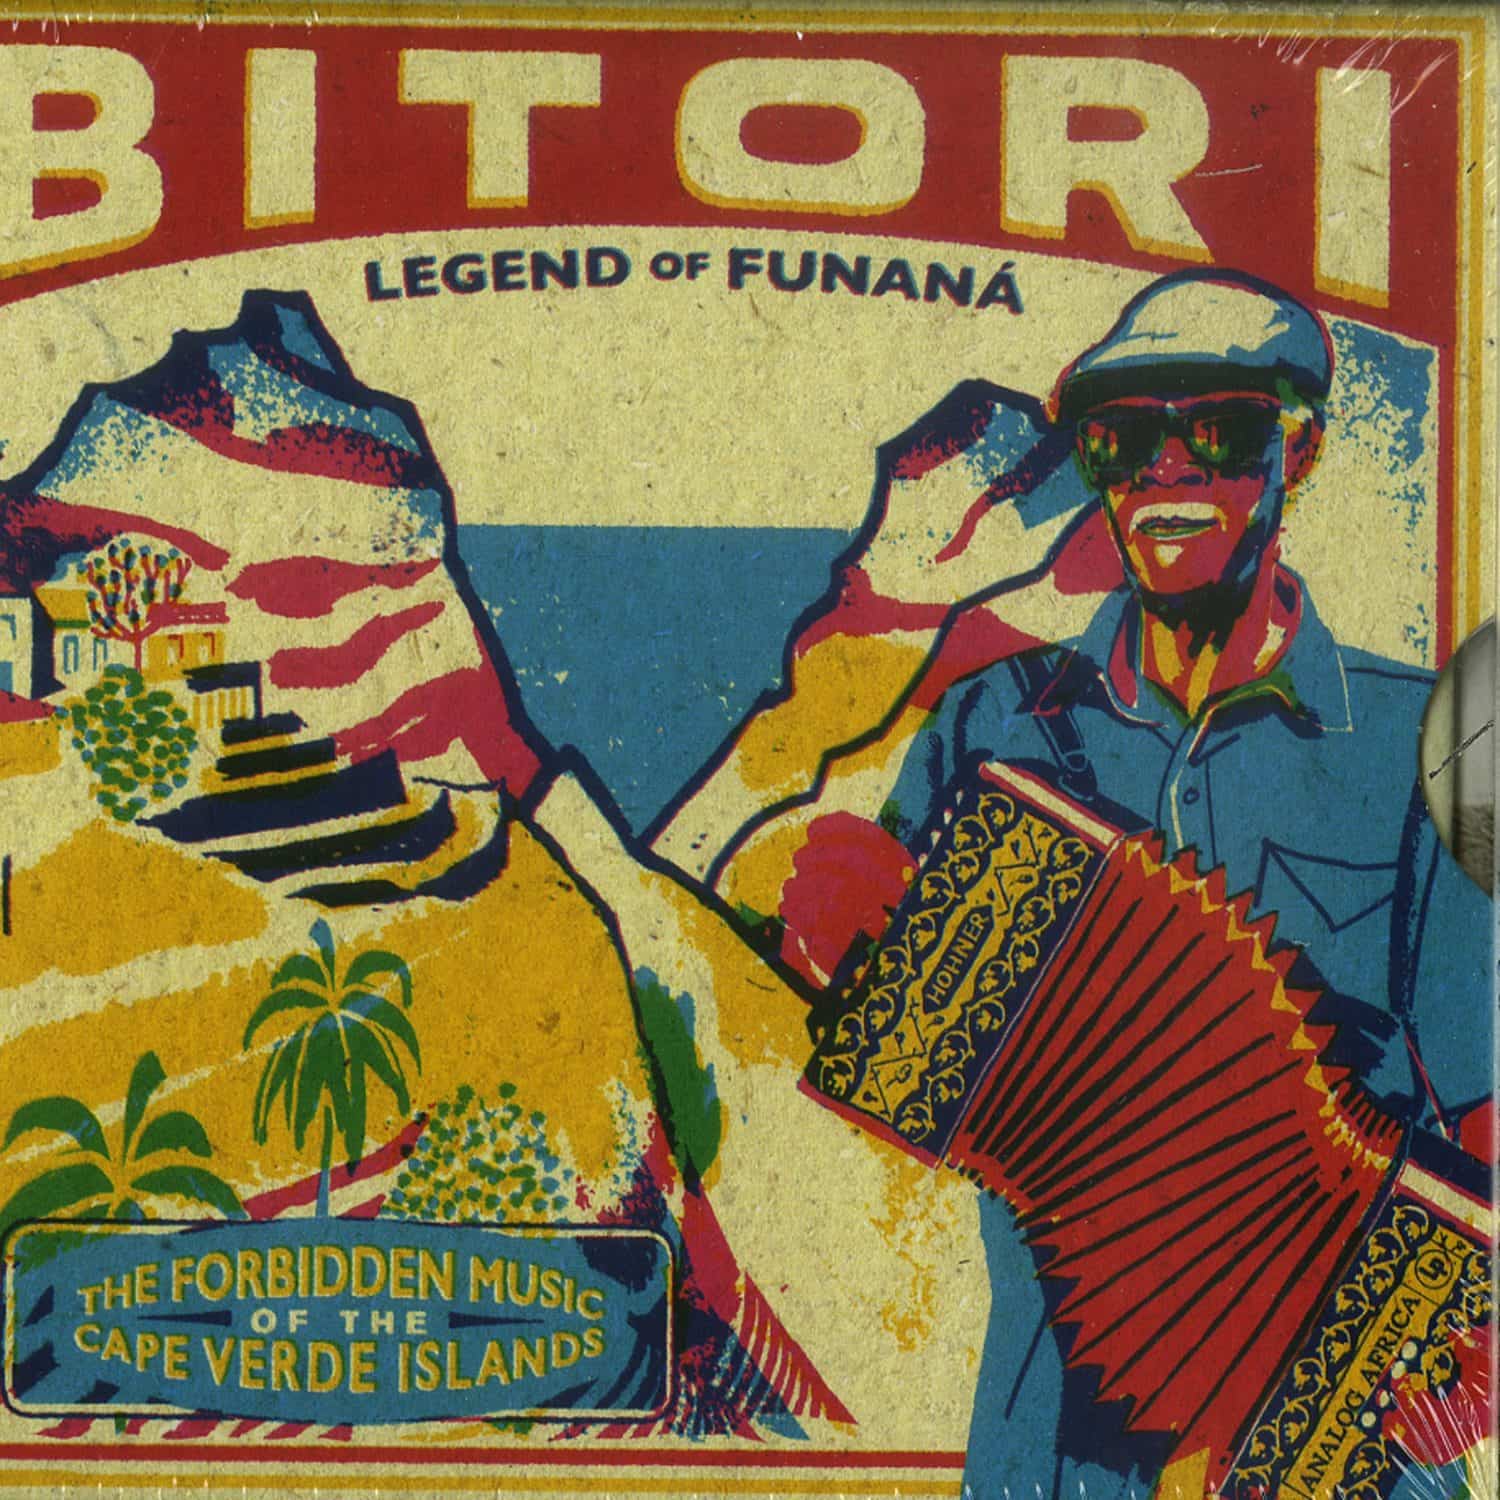 Bitori - LEGEND OF FUNANA: THE FORBIDDEN MUSIC OF THE CAPE VERDE ISLANDS 